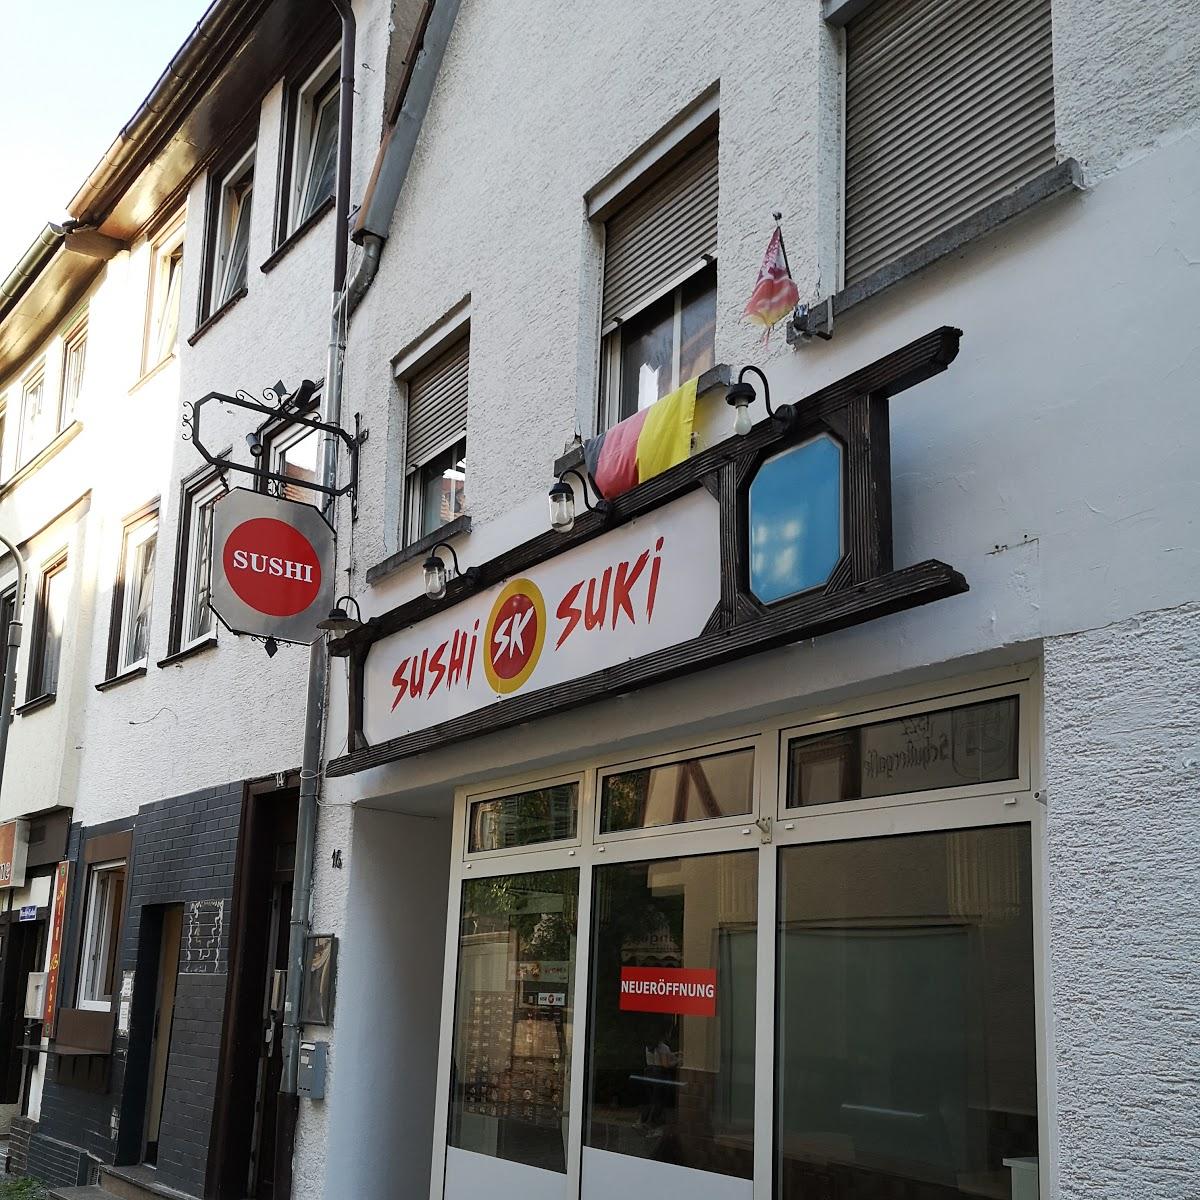 Restaurant "Sushi Suki" in Friedberg (Hessen)